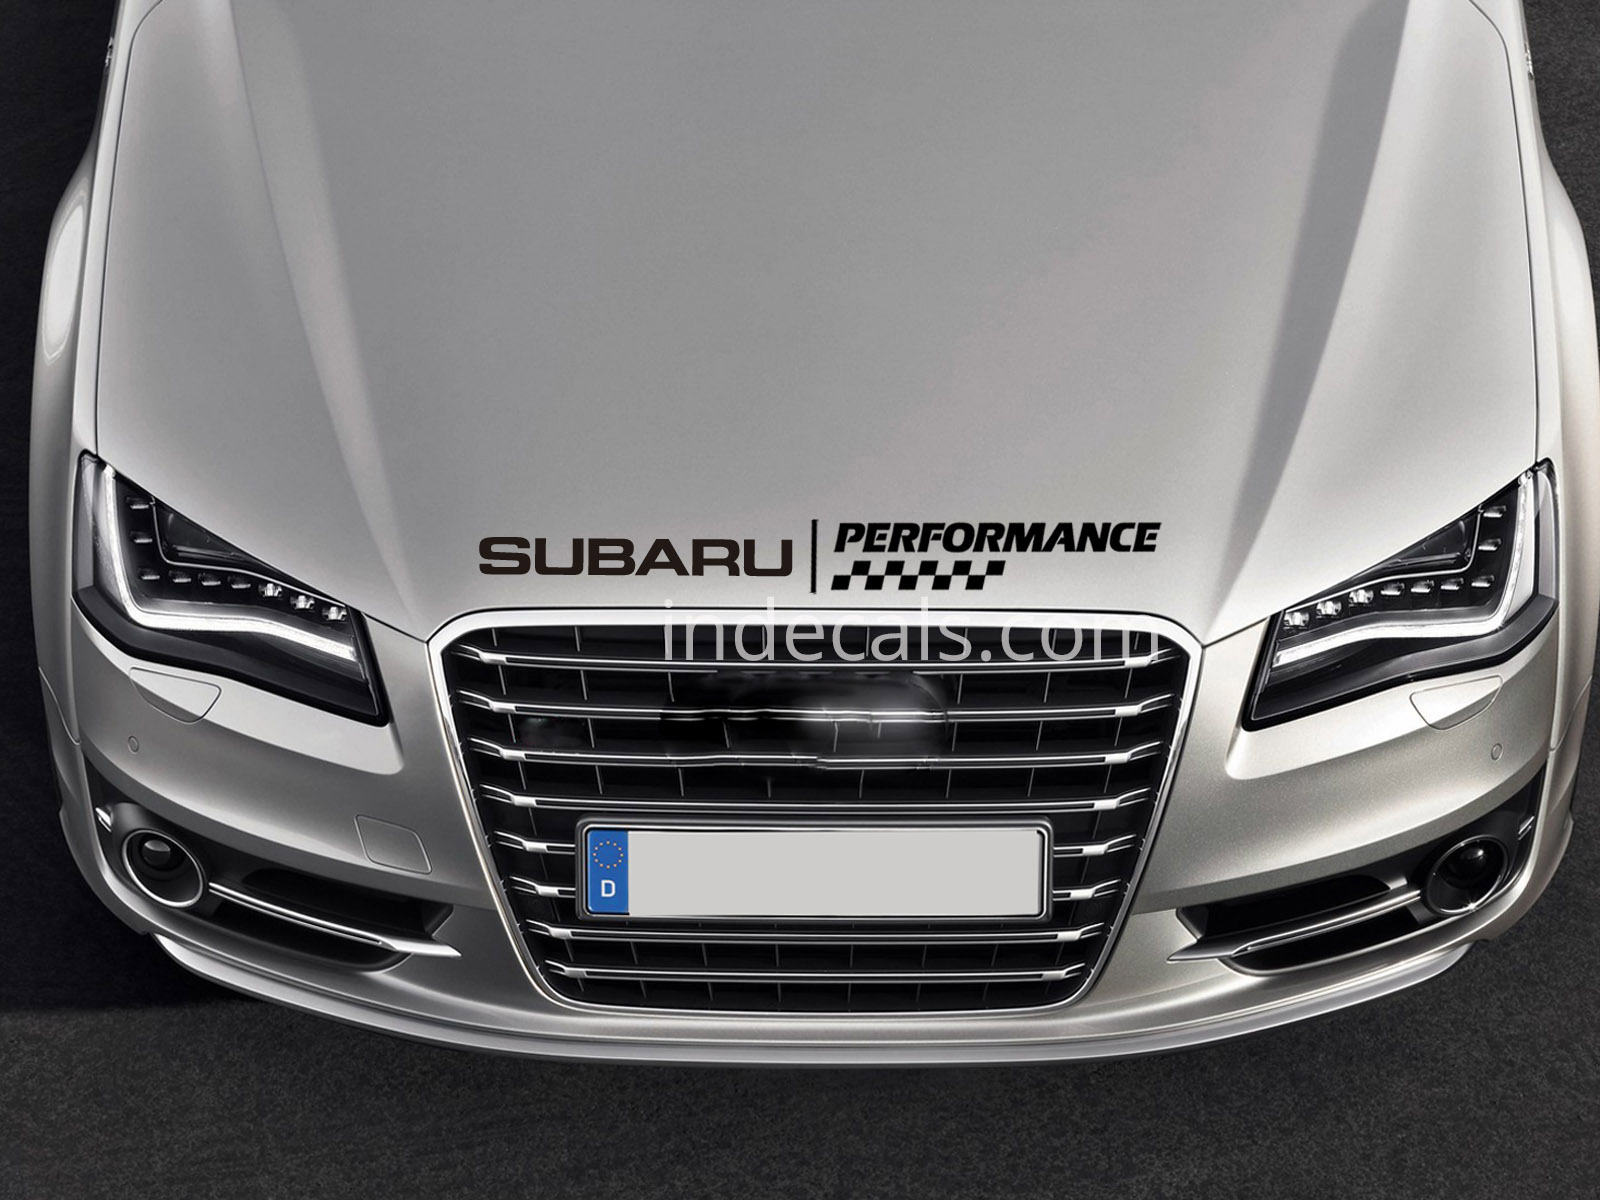 1 x Subaru Performance Sticker for Windshield or Back Window - Black